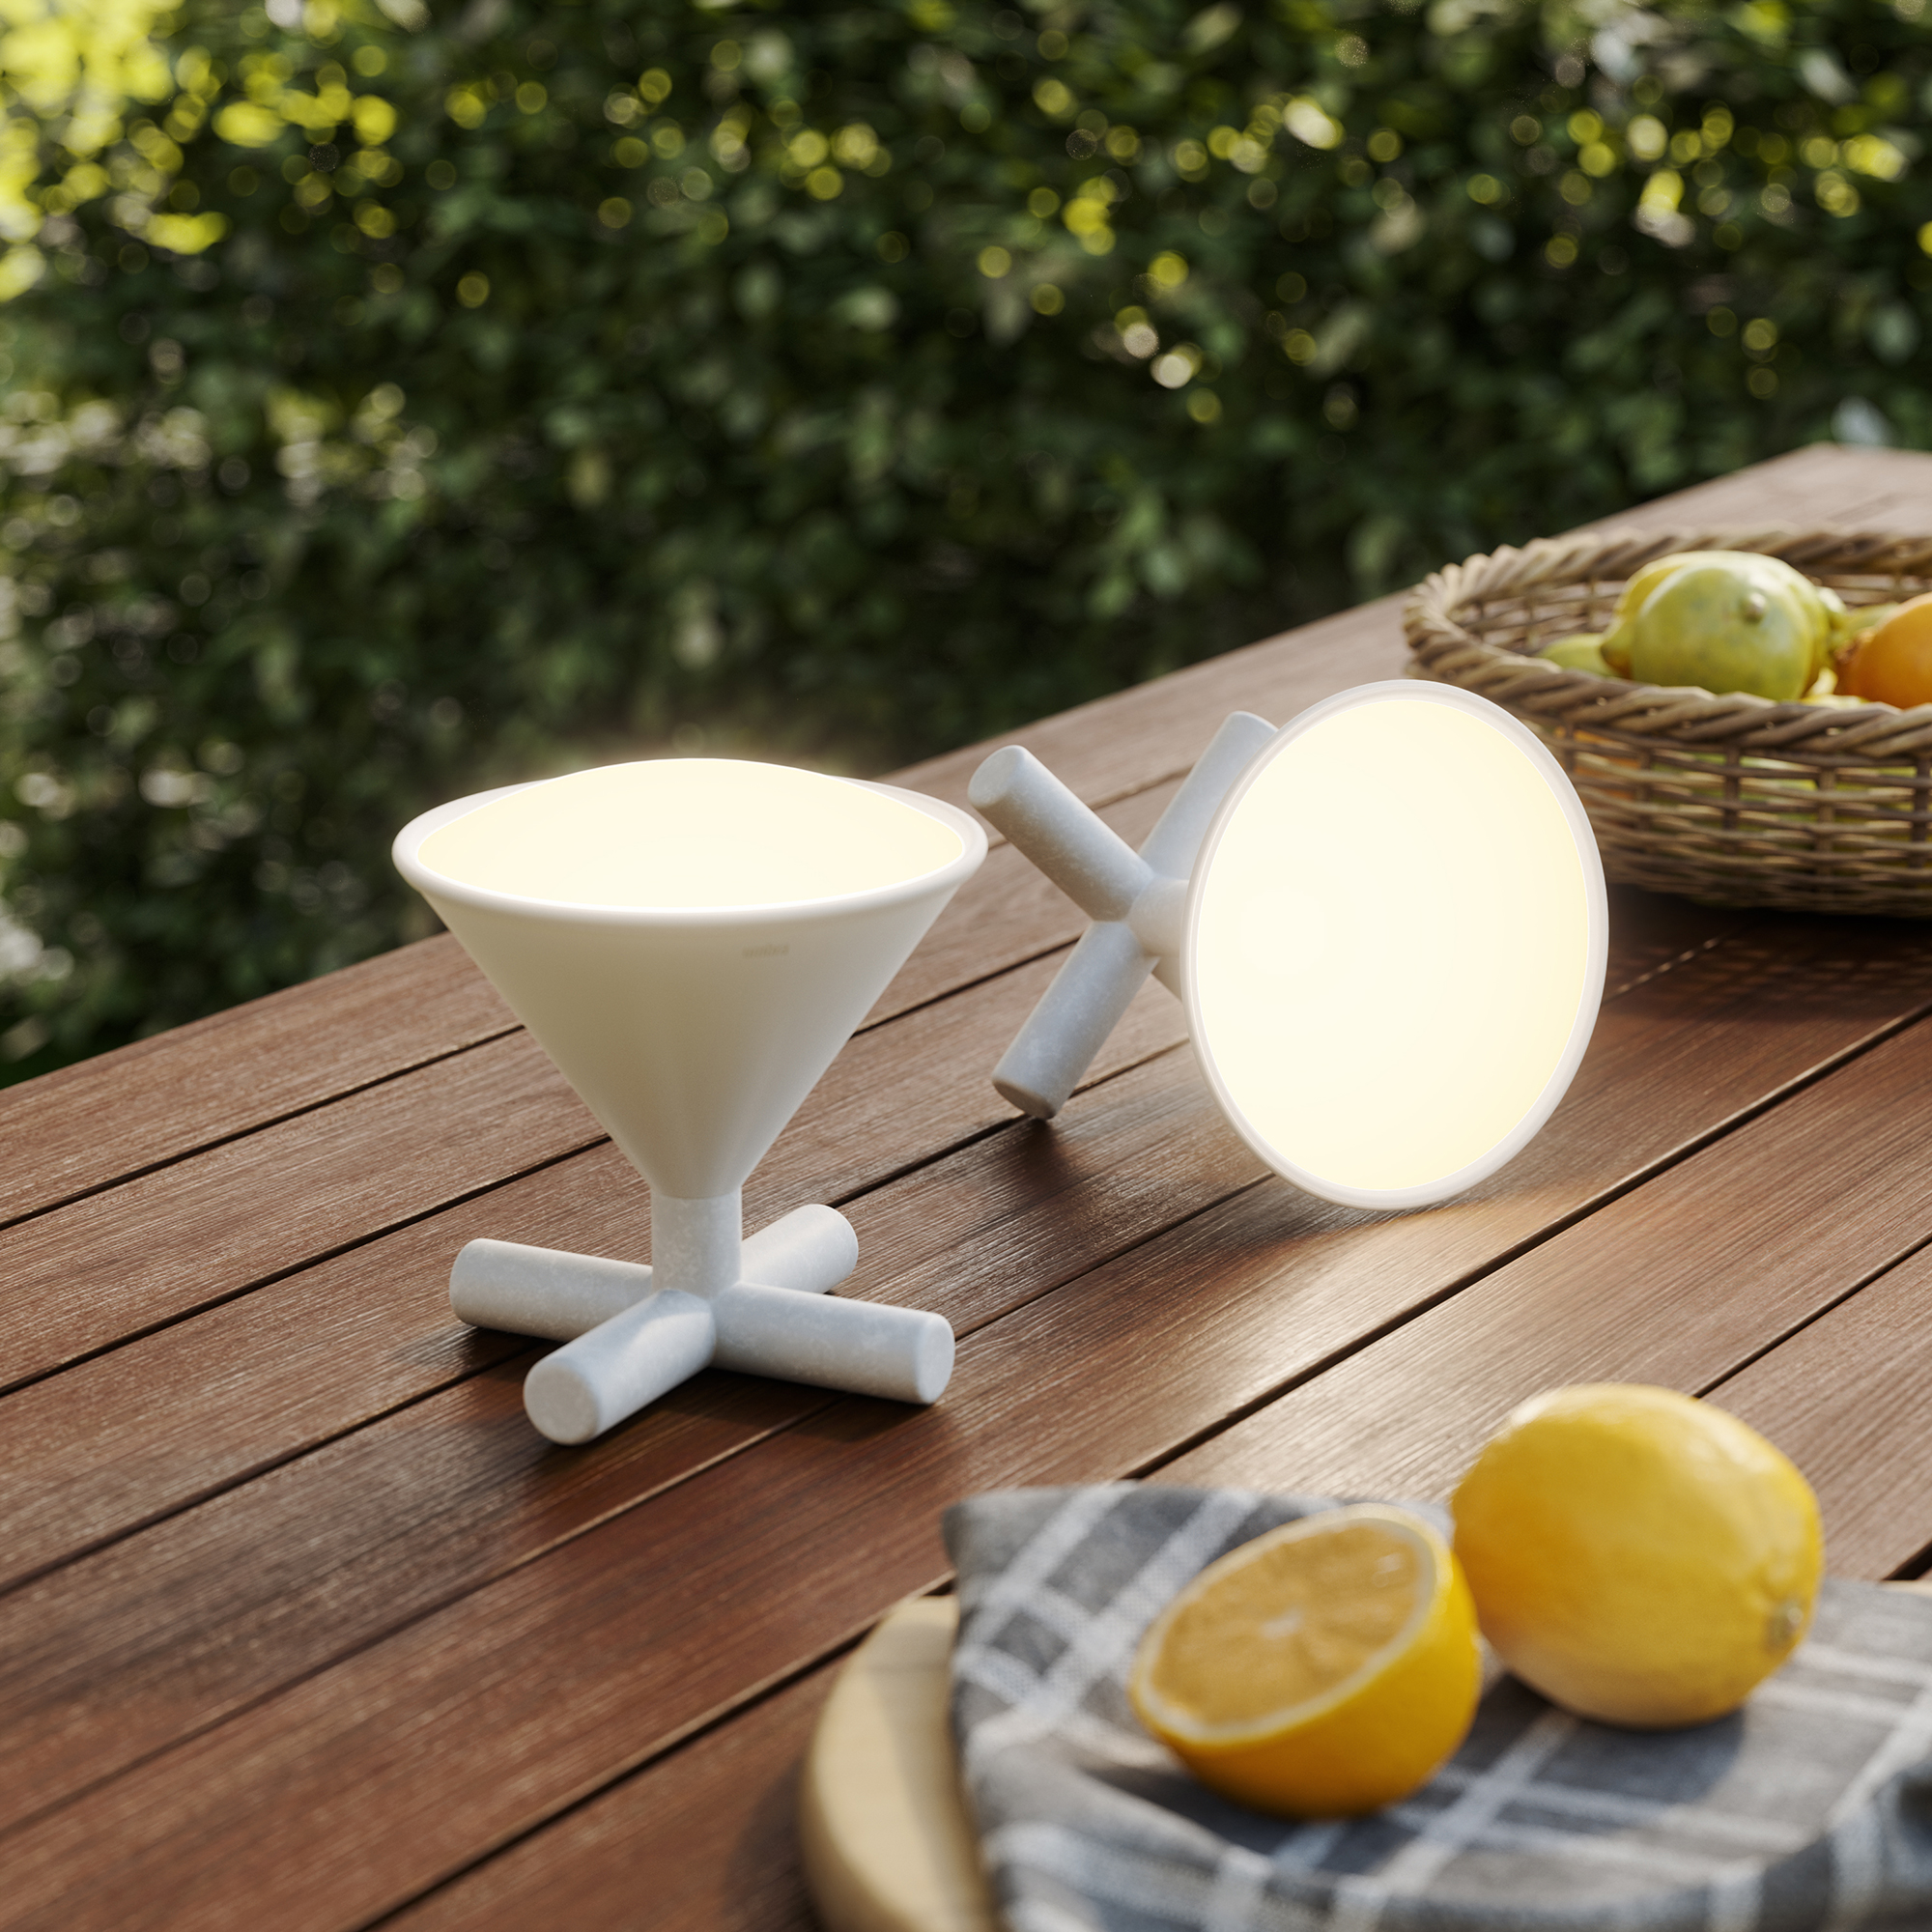 Umbra and Nanoleaf Unveil the Smart Lamp Collection - Gessato